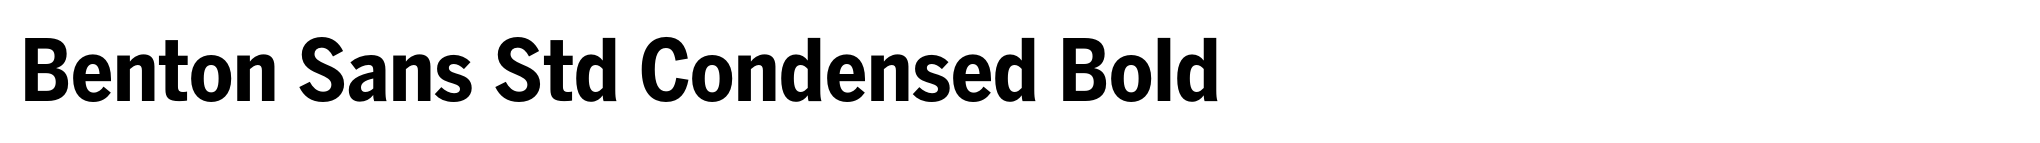 Benton Sans Std Condensed Bold image